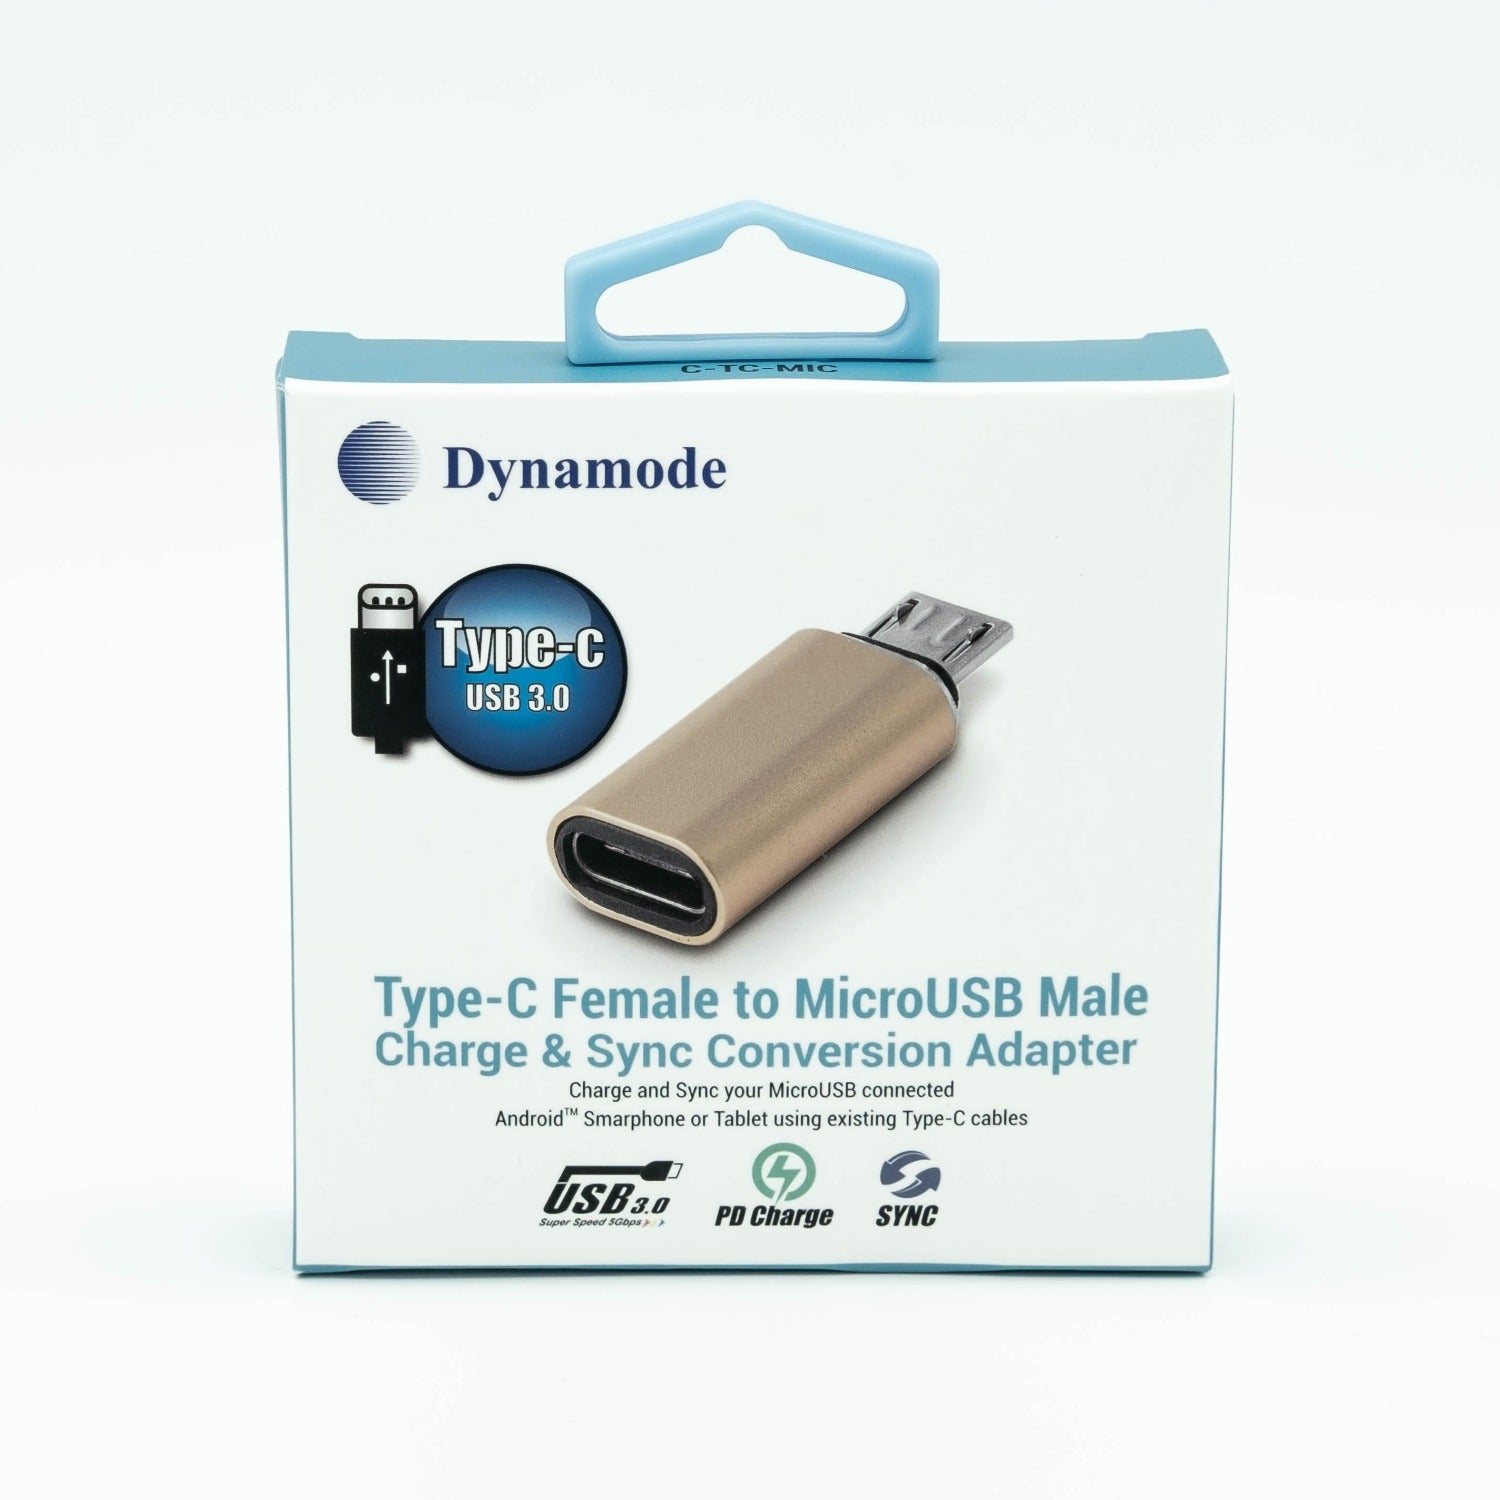 USB3.0 Type-C to Micro USB Adapter - Netbit UK